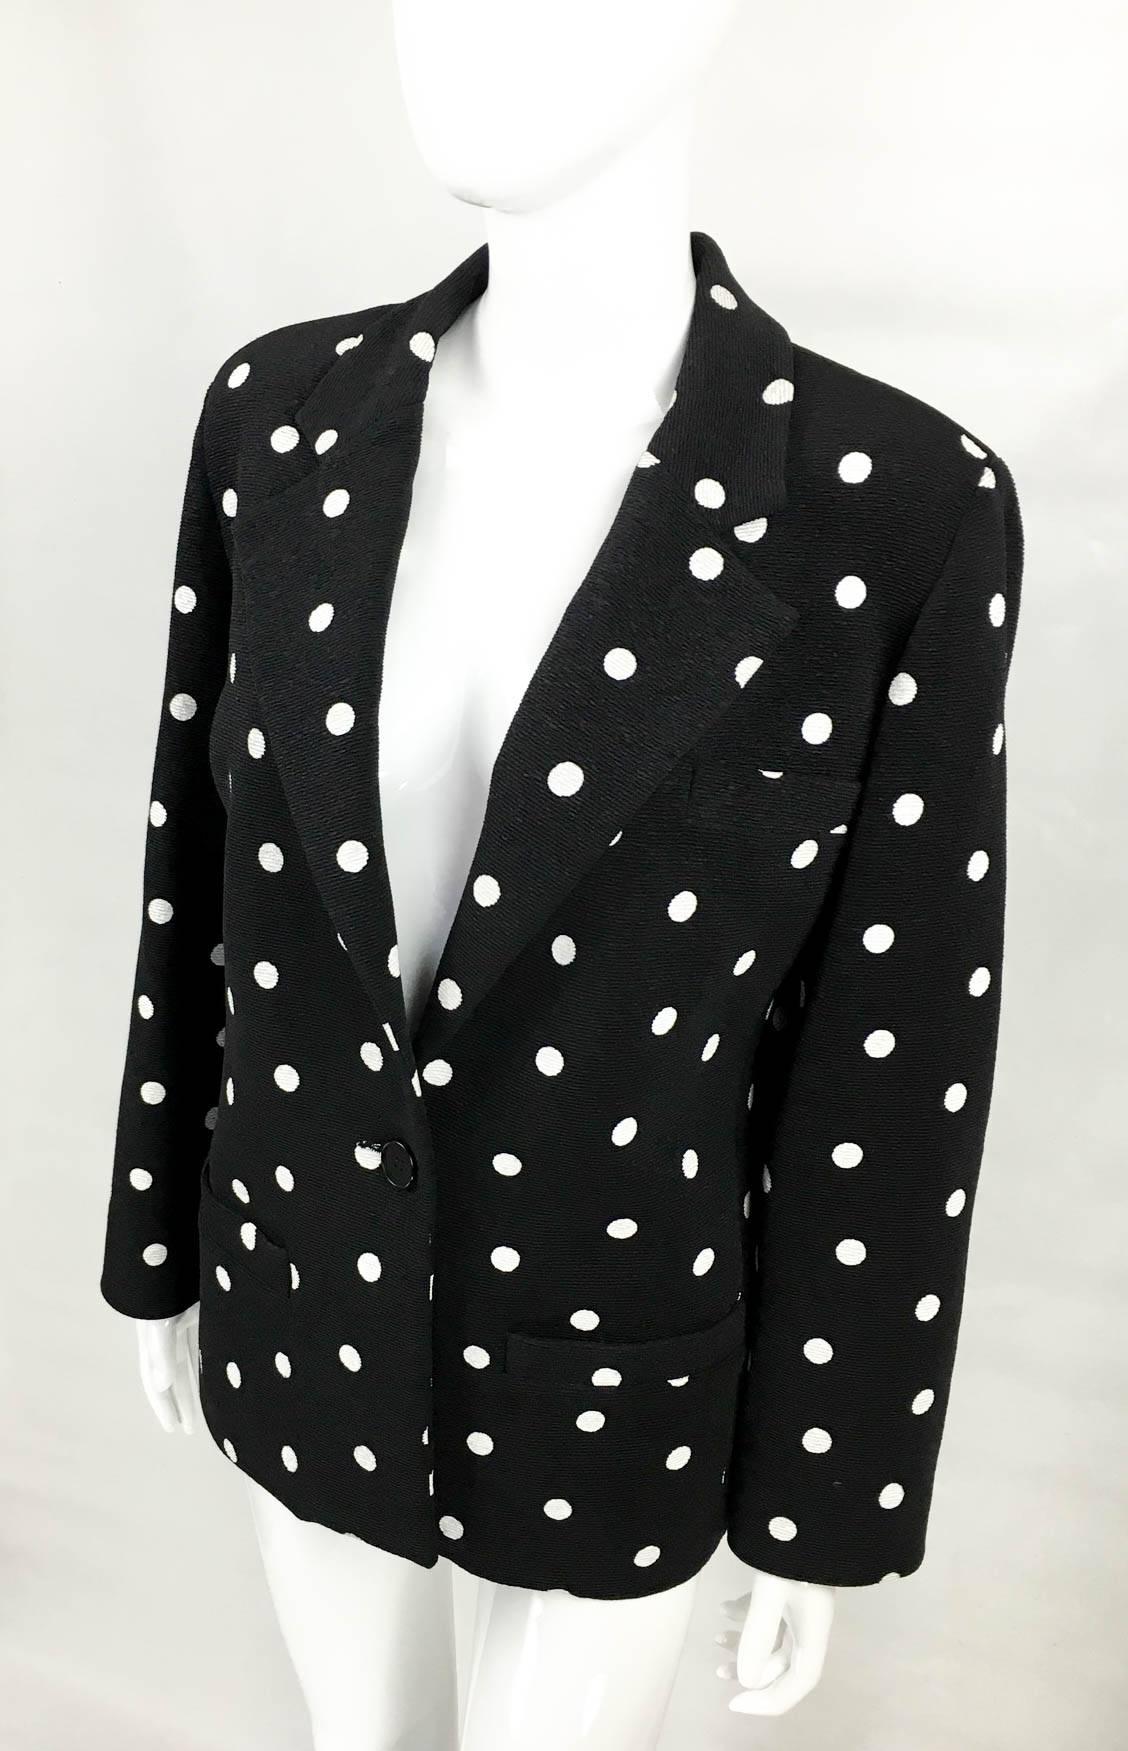 Balenciaga Black and White Polka Dot Blazer - 1980s 1